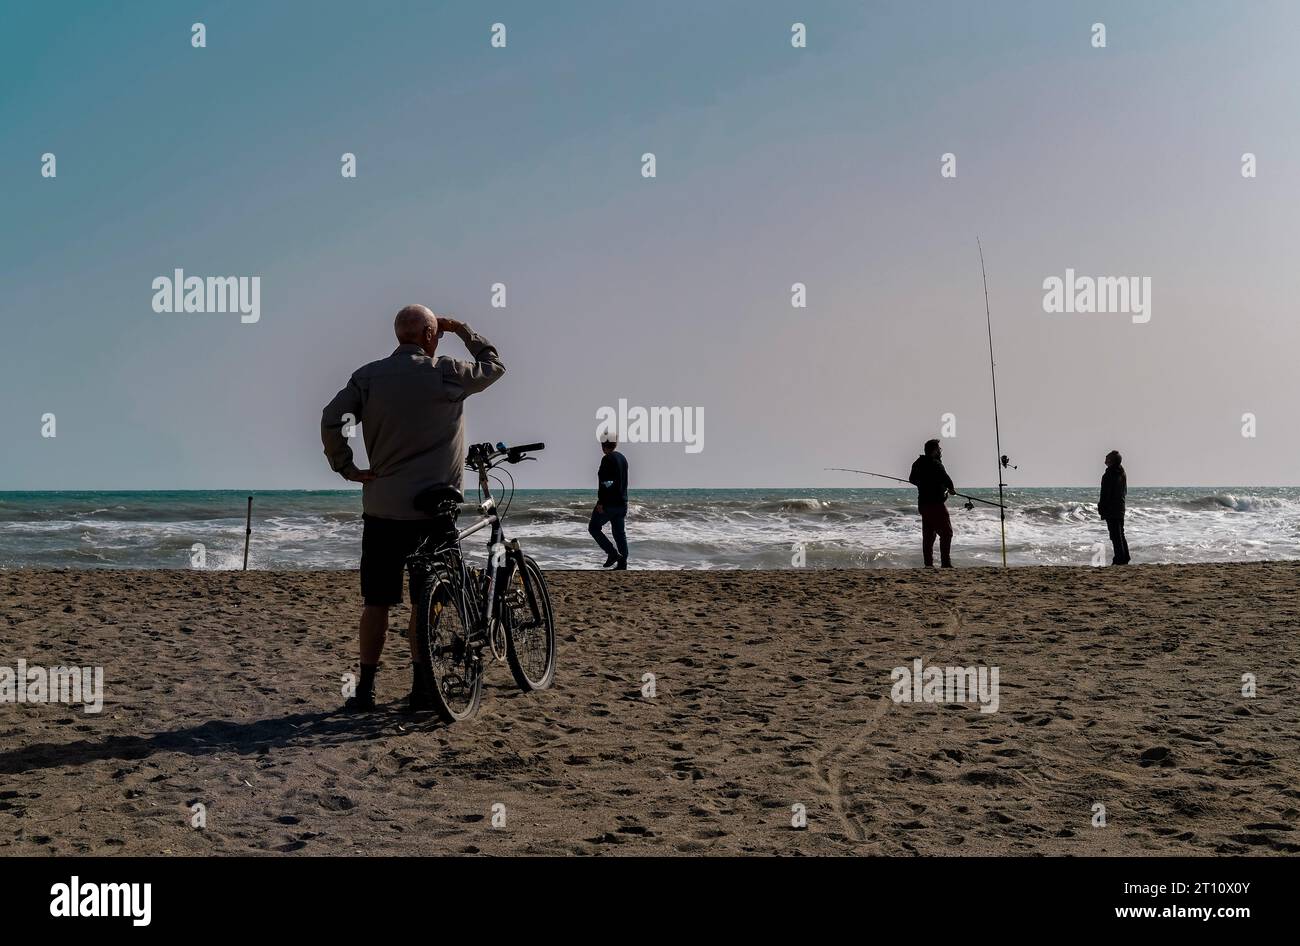 Malaga beach, backlit photo, four people enjoying a sunny day, silhouettesMalaga beach, backlit photo, two people enjoying a sunny day, silhouettes, Stock Photo